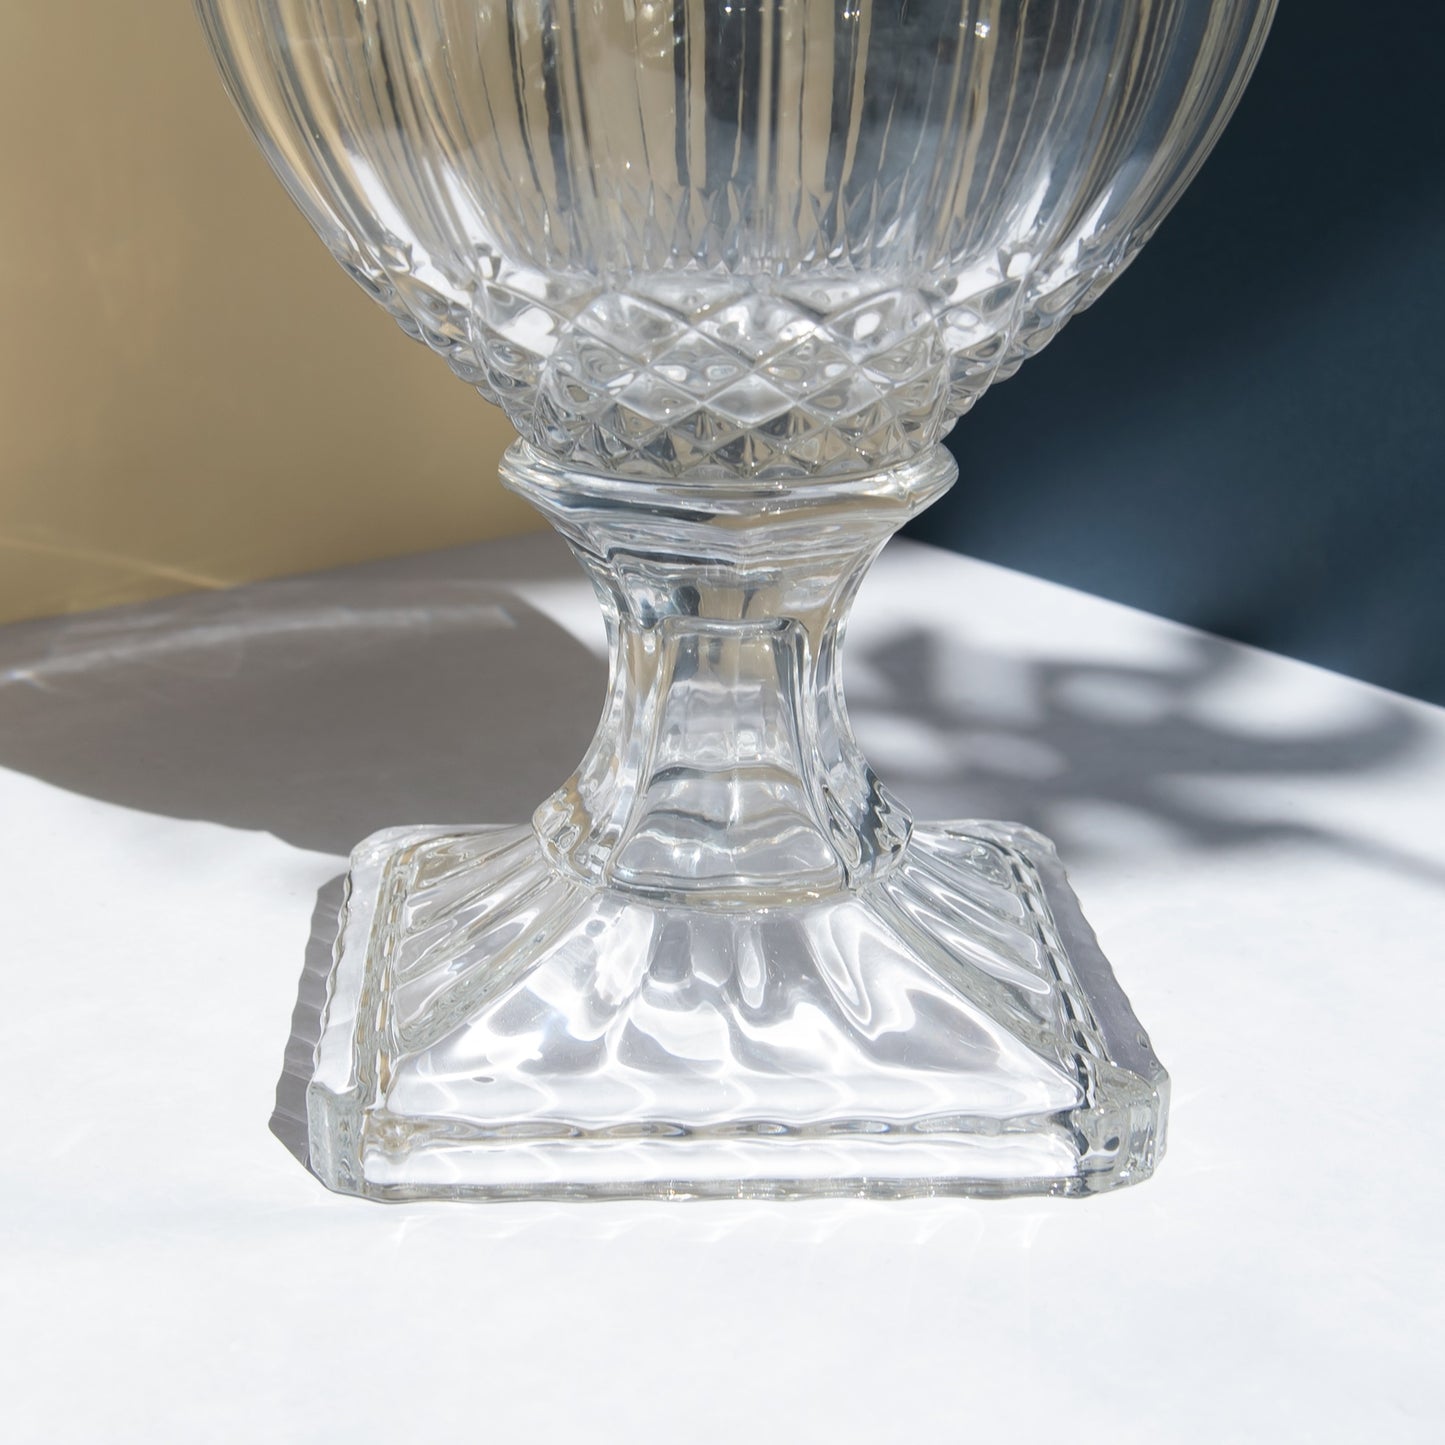 Large Savita Clear Glass Footed Jar - Home Decoration